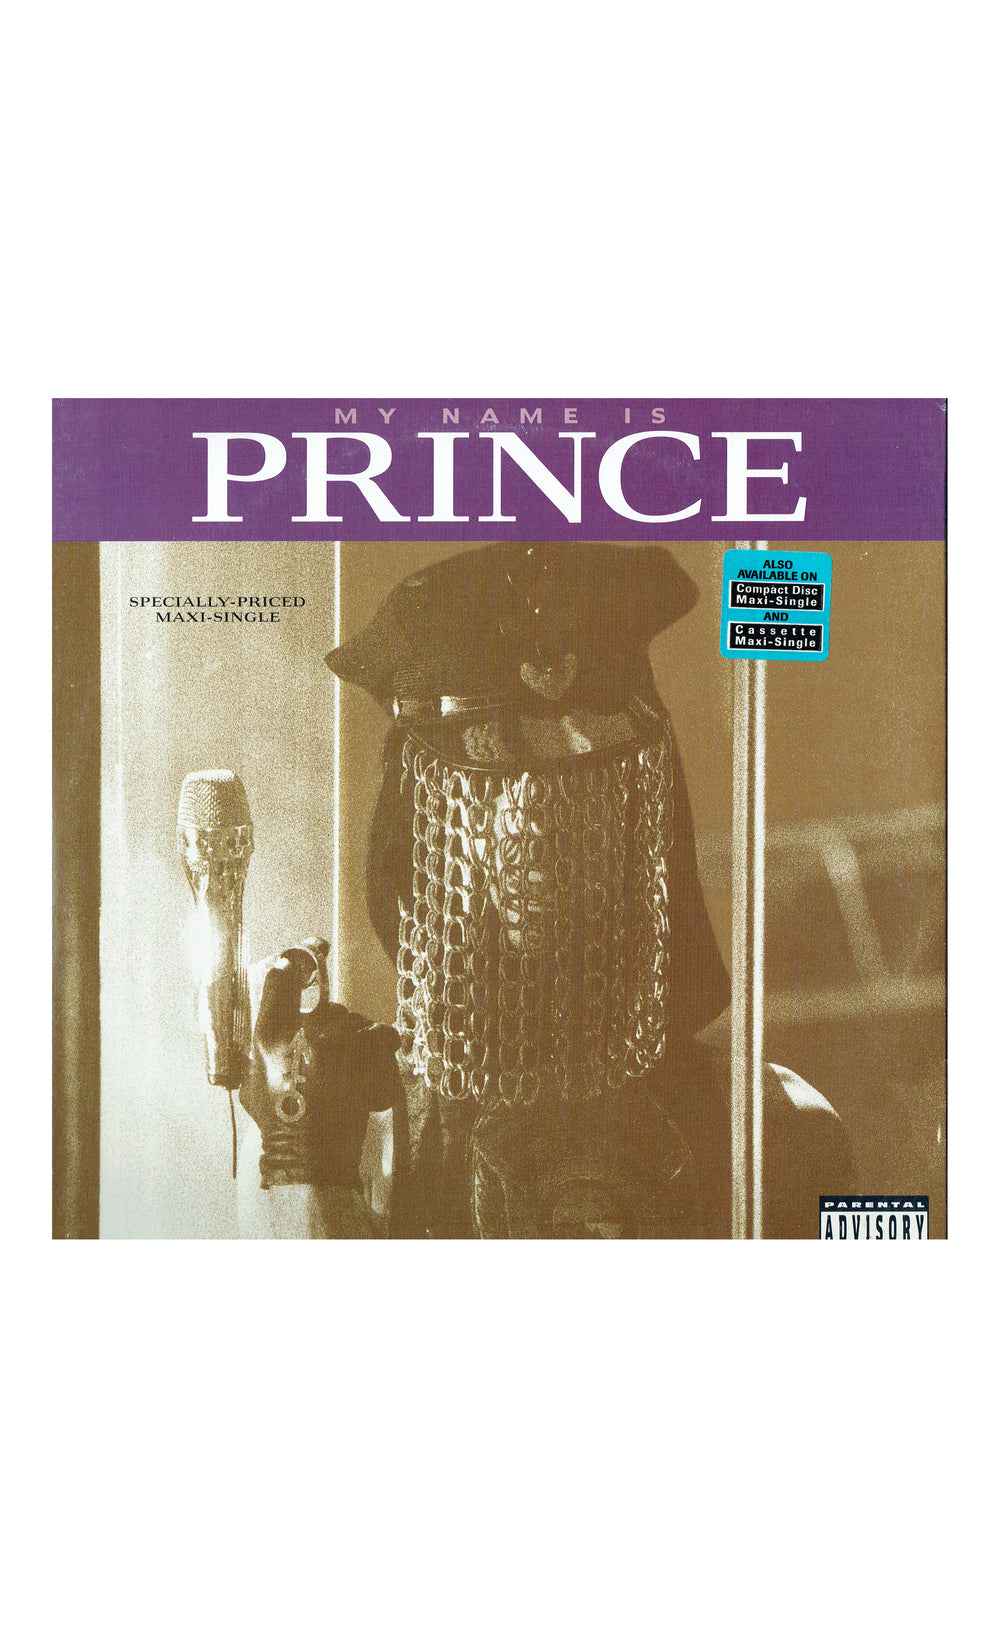 Prince My Name Is Prince Maxi Single 12 Inch Vinyl USA PS 9-40700-0